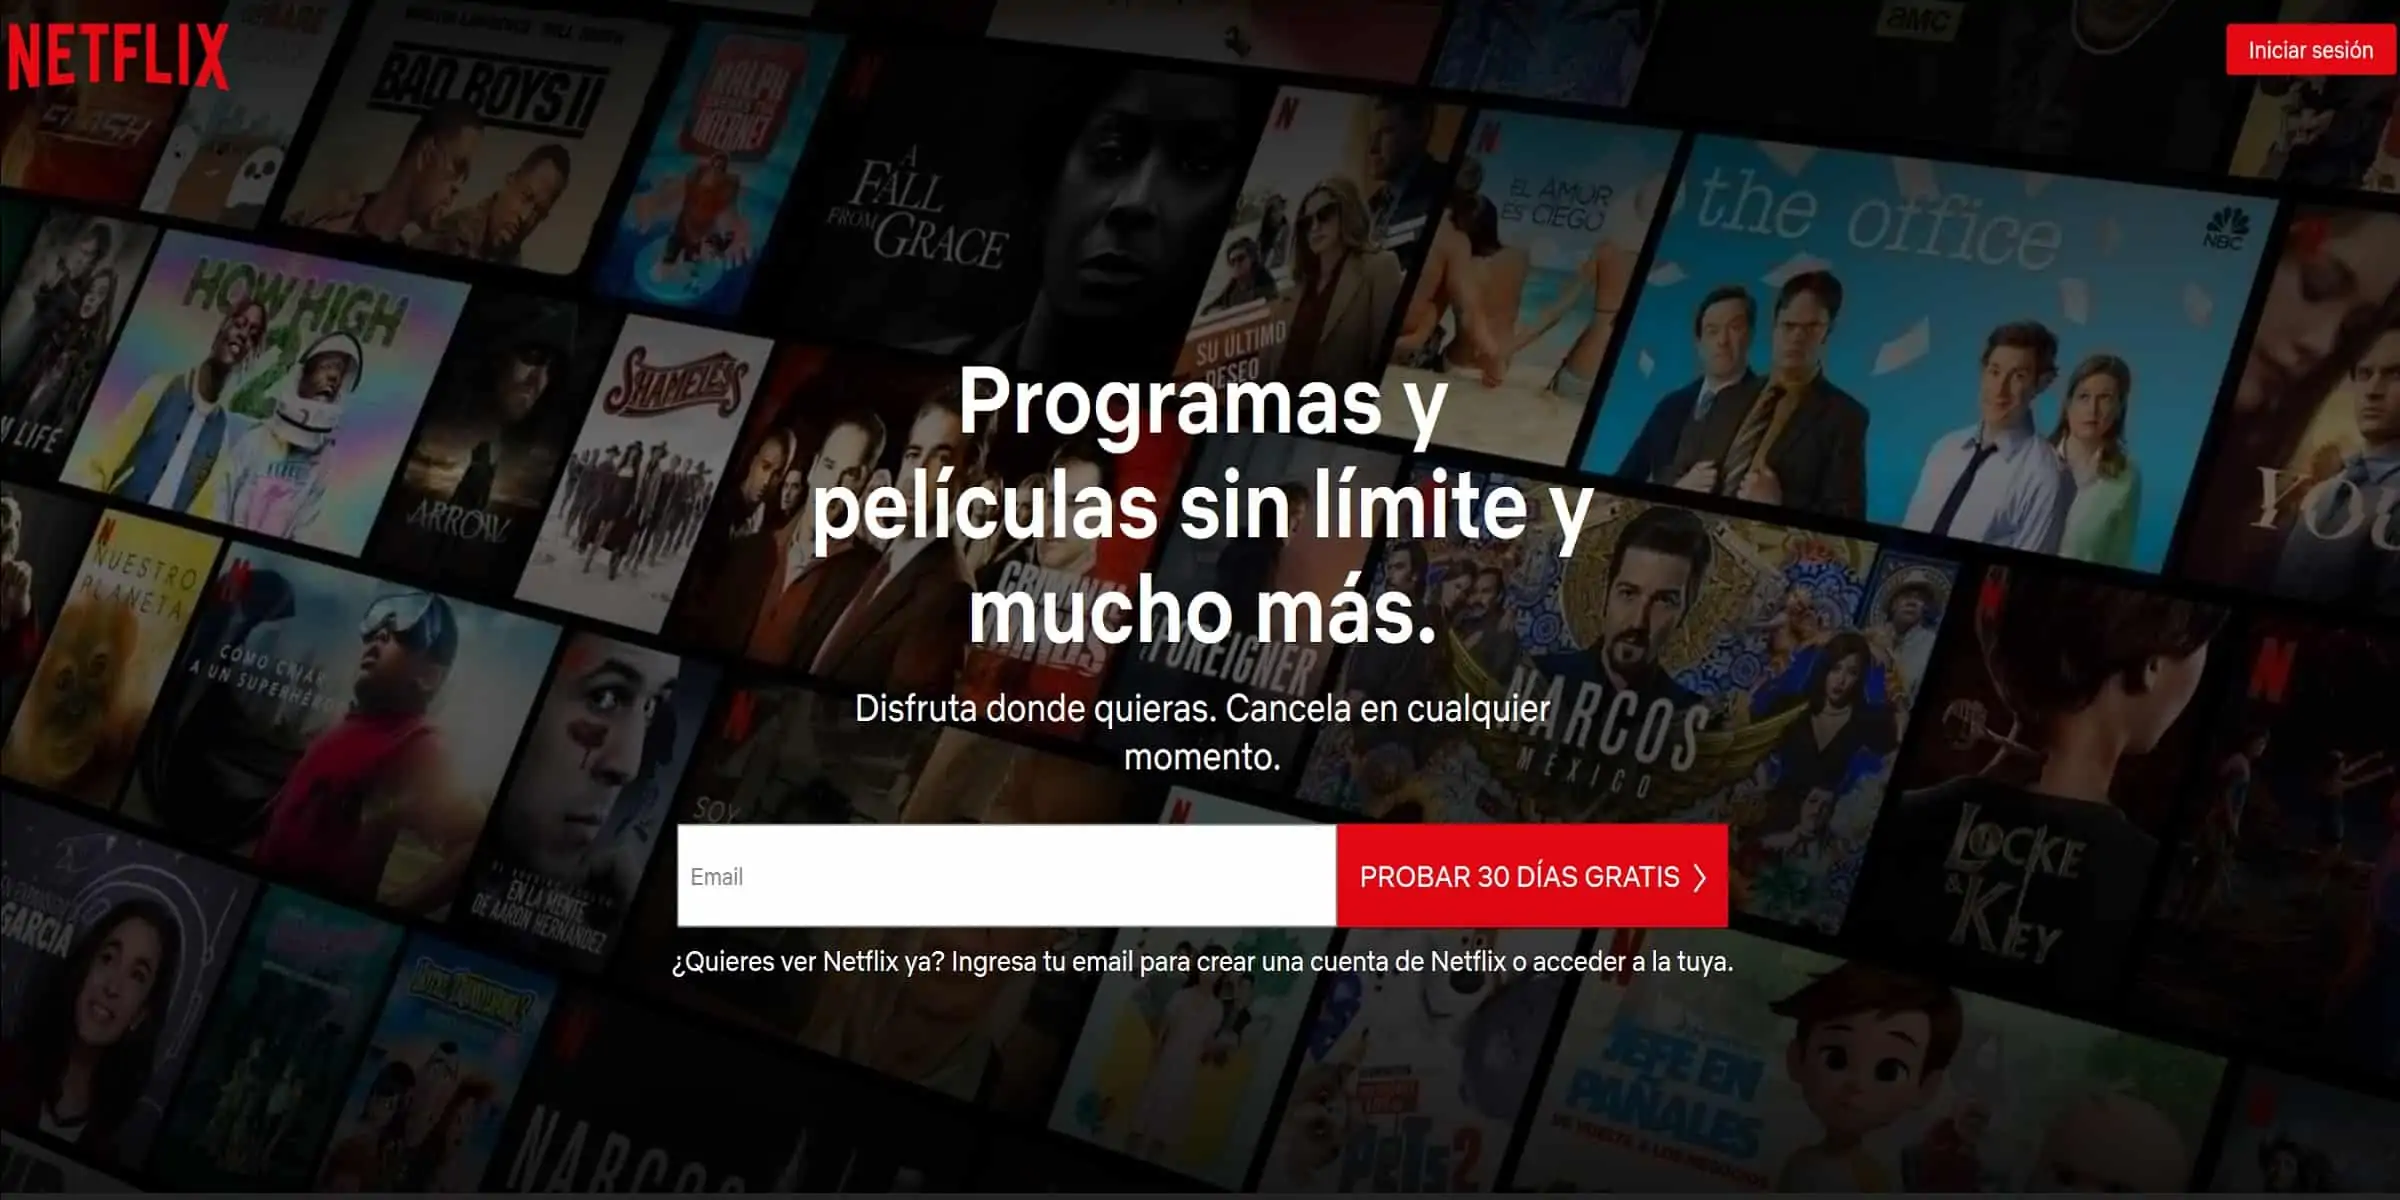 Netflix Spain